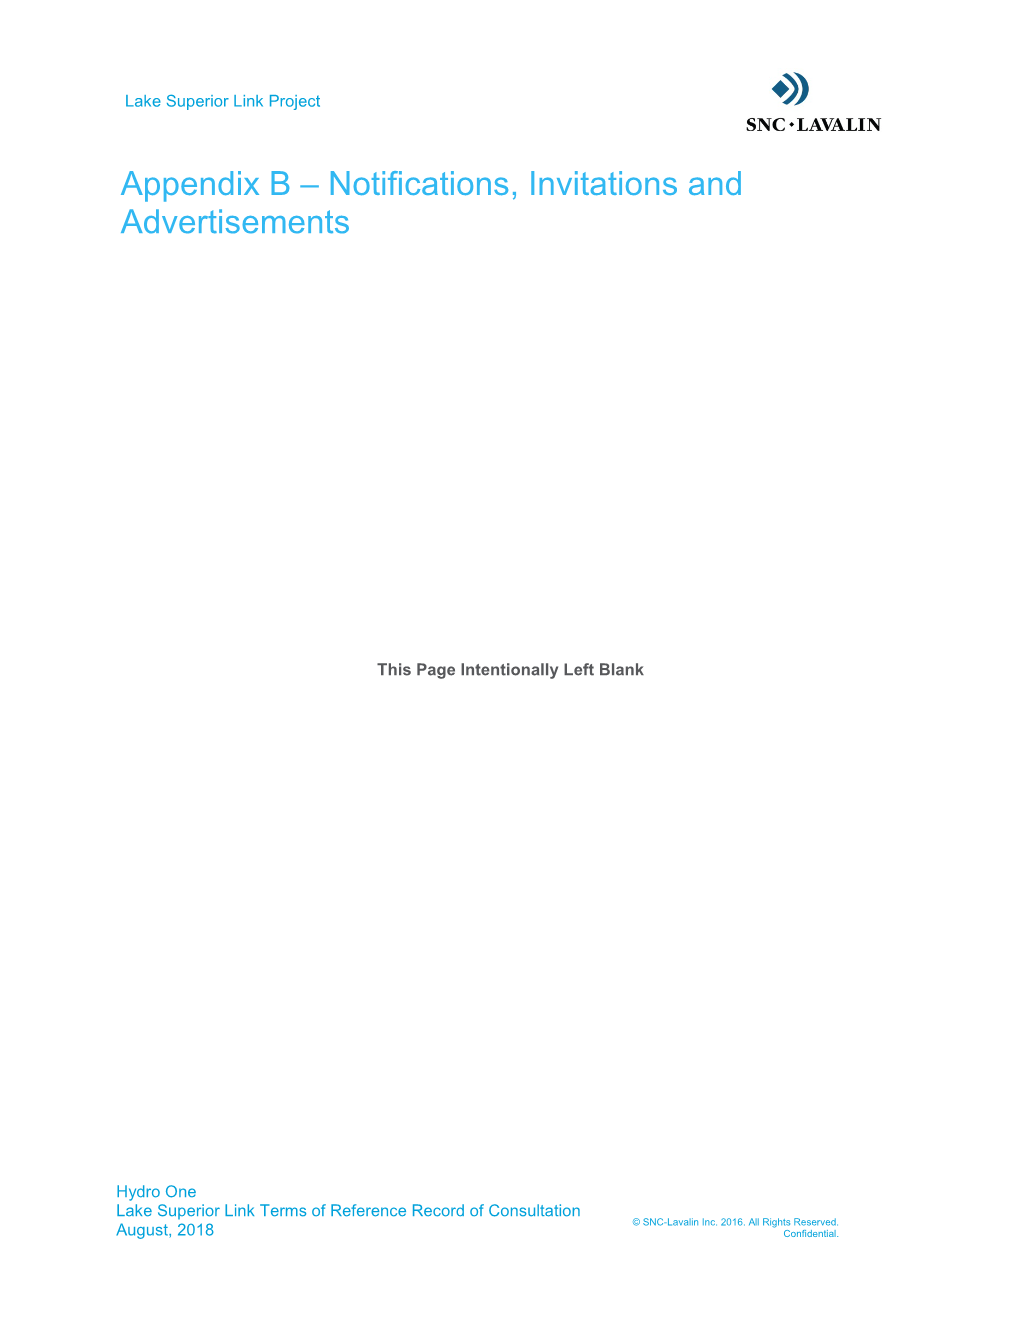 Appendix B – Notifications, Invitations and Advertisements